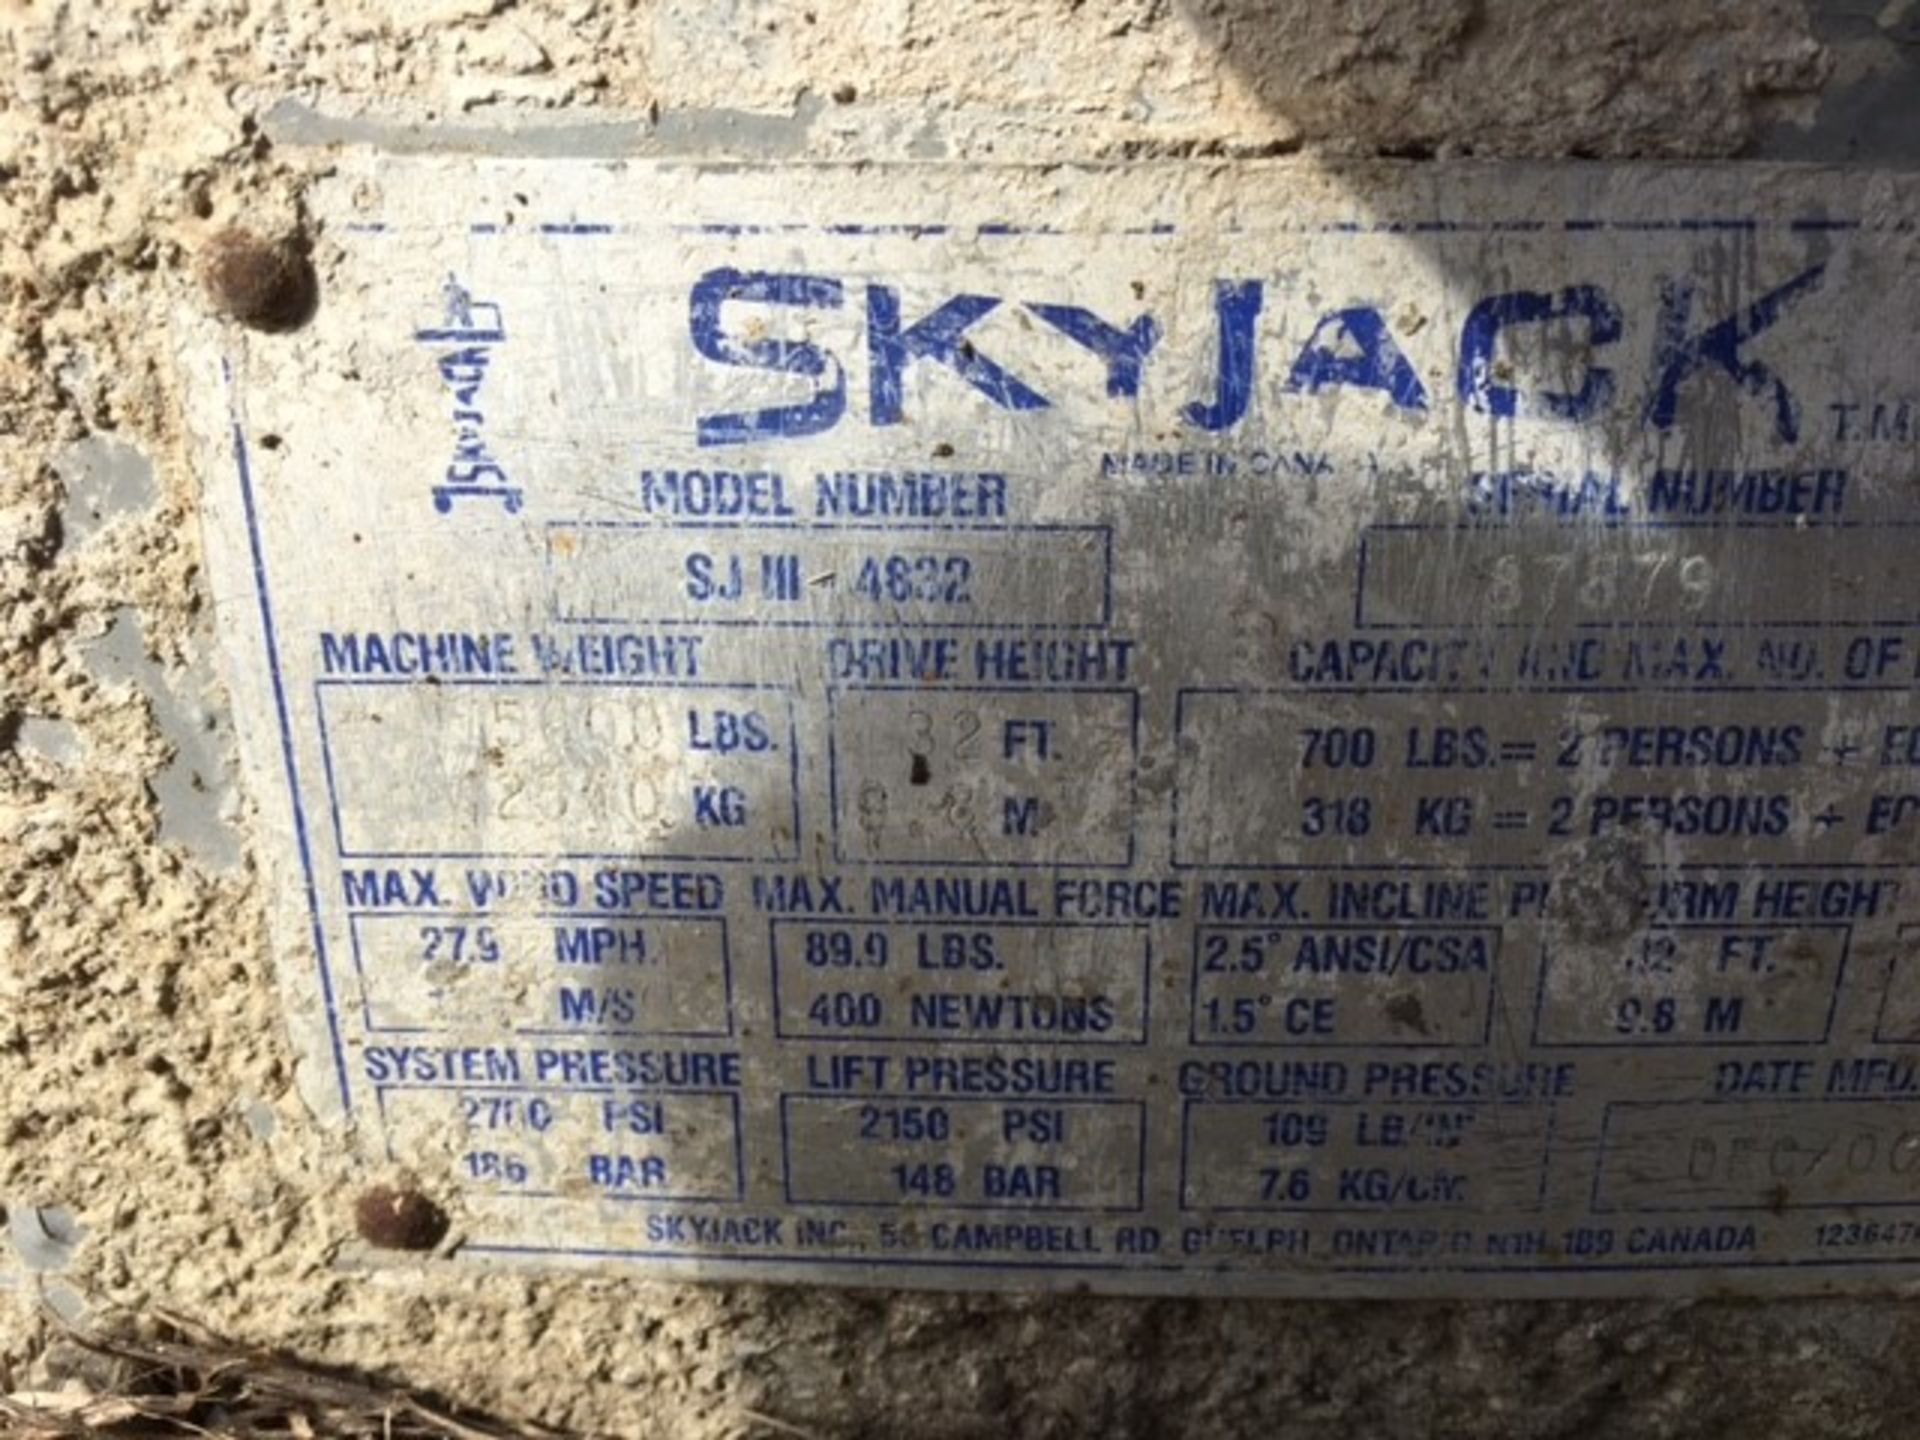 SKYJACK SJ III-4832 SCISSOR LIFT - Image 3 of 7